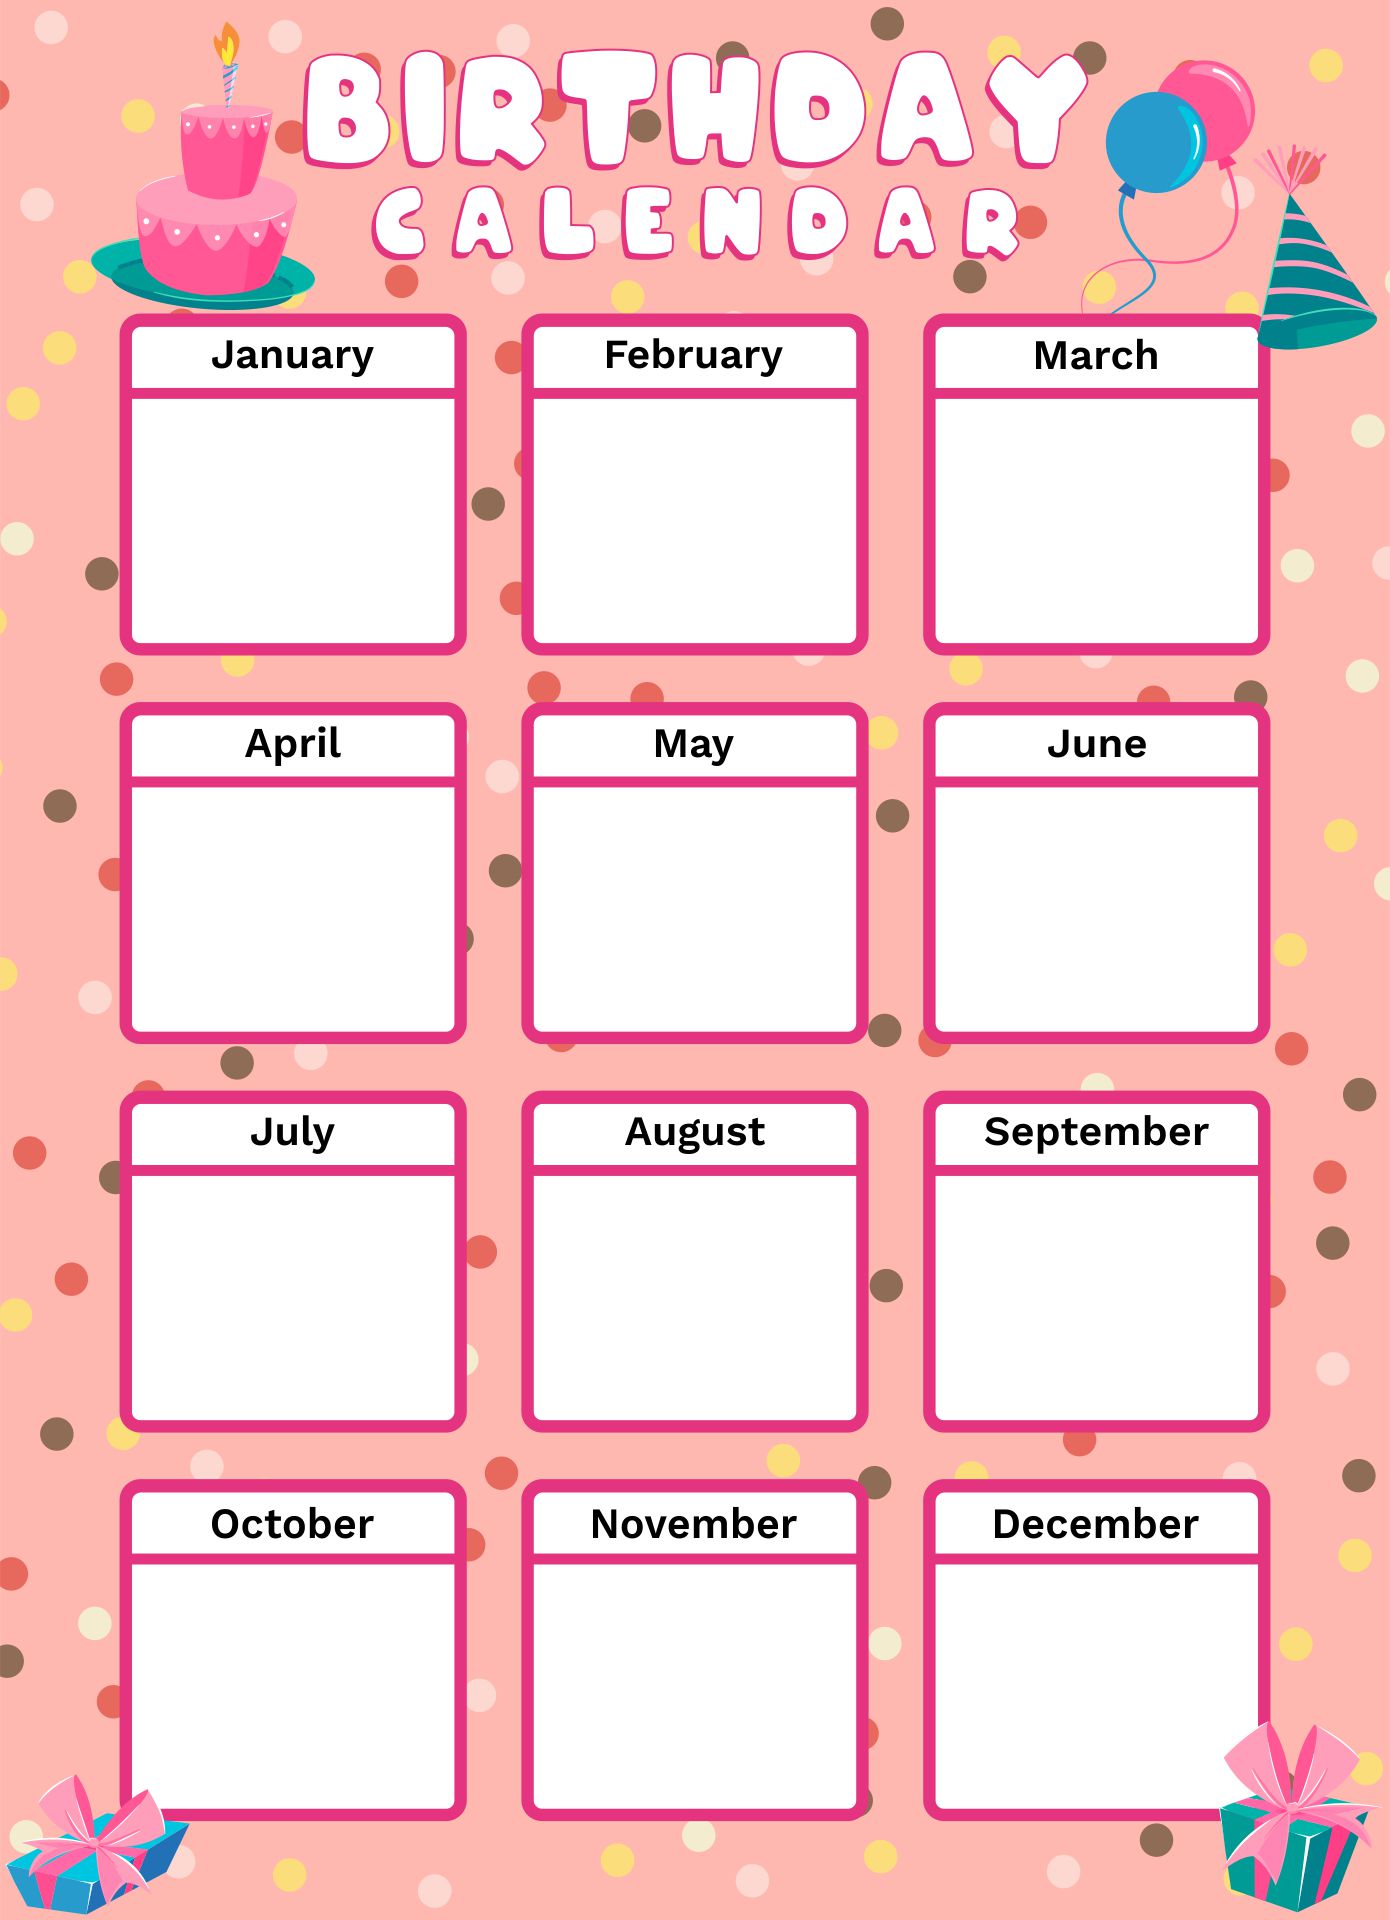 free calendar template for birthdays 41